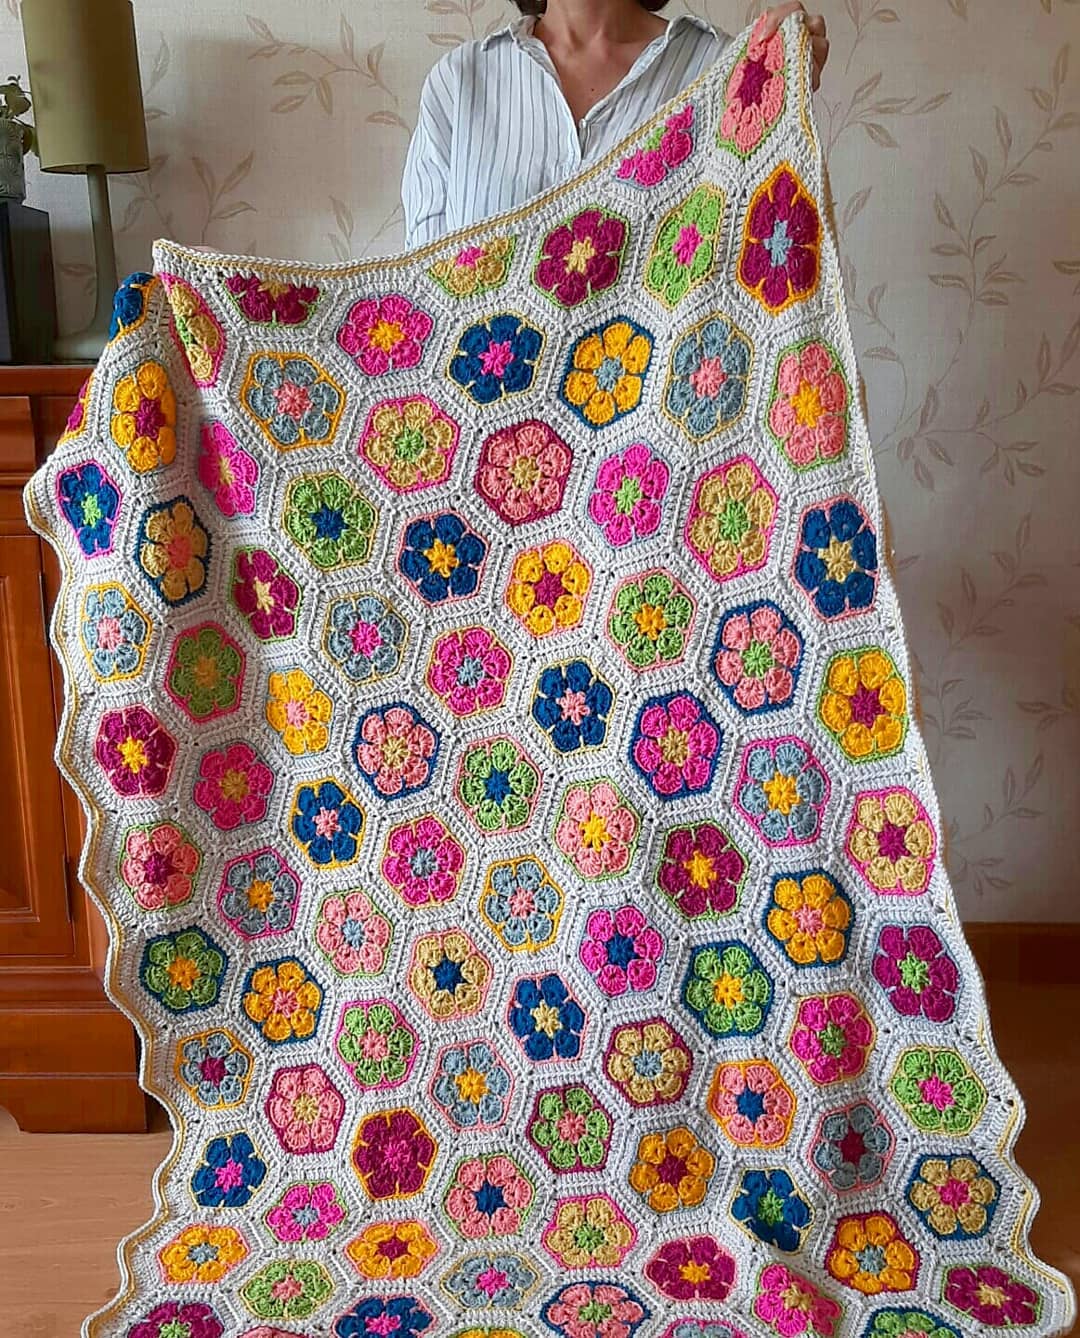 floral crochet afghan by  https://www.instagram.com/capitana_garfio/